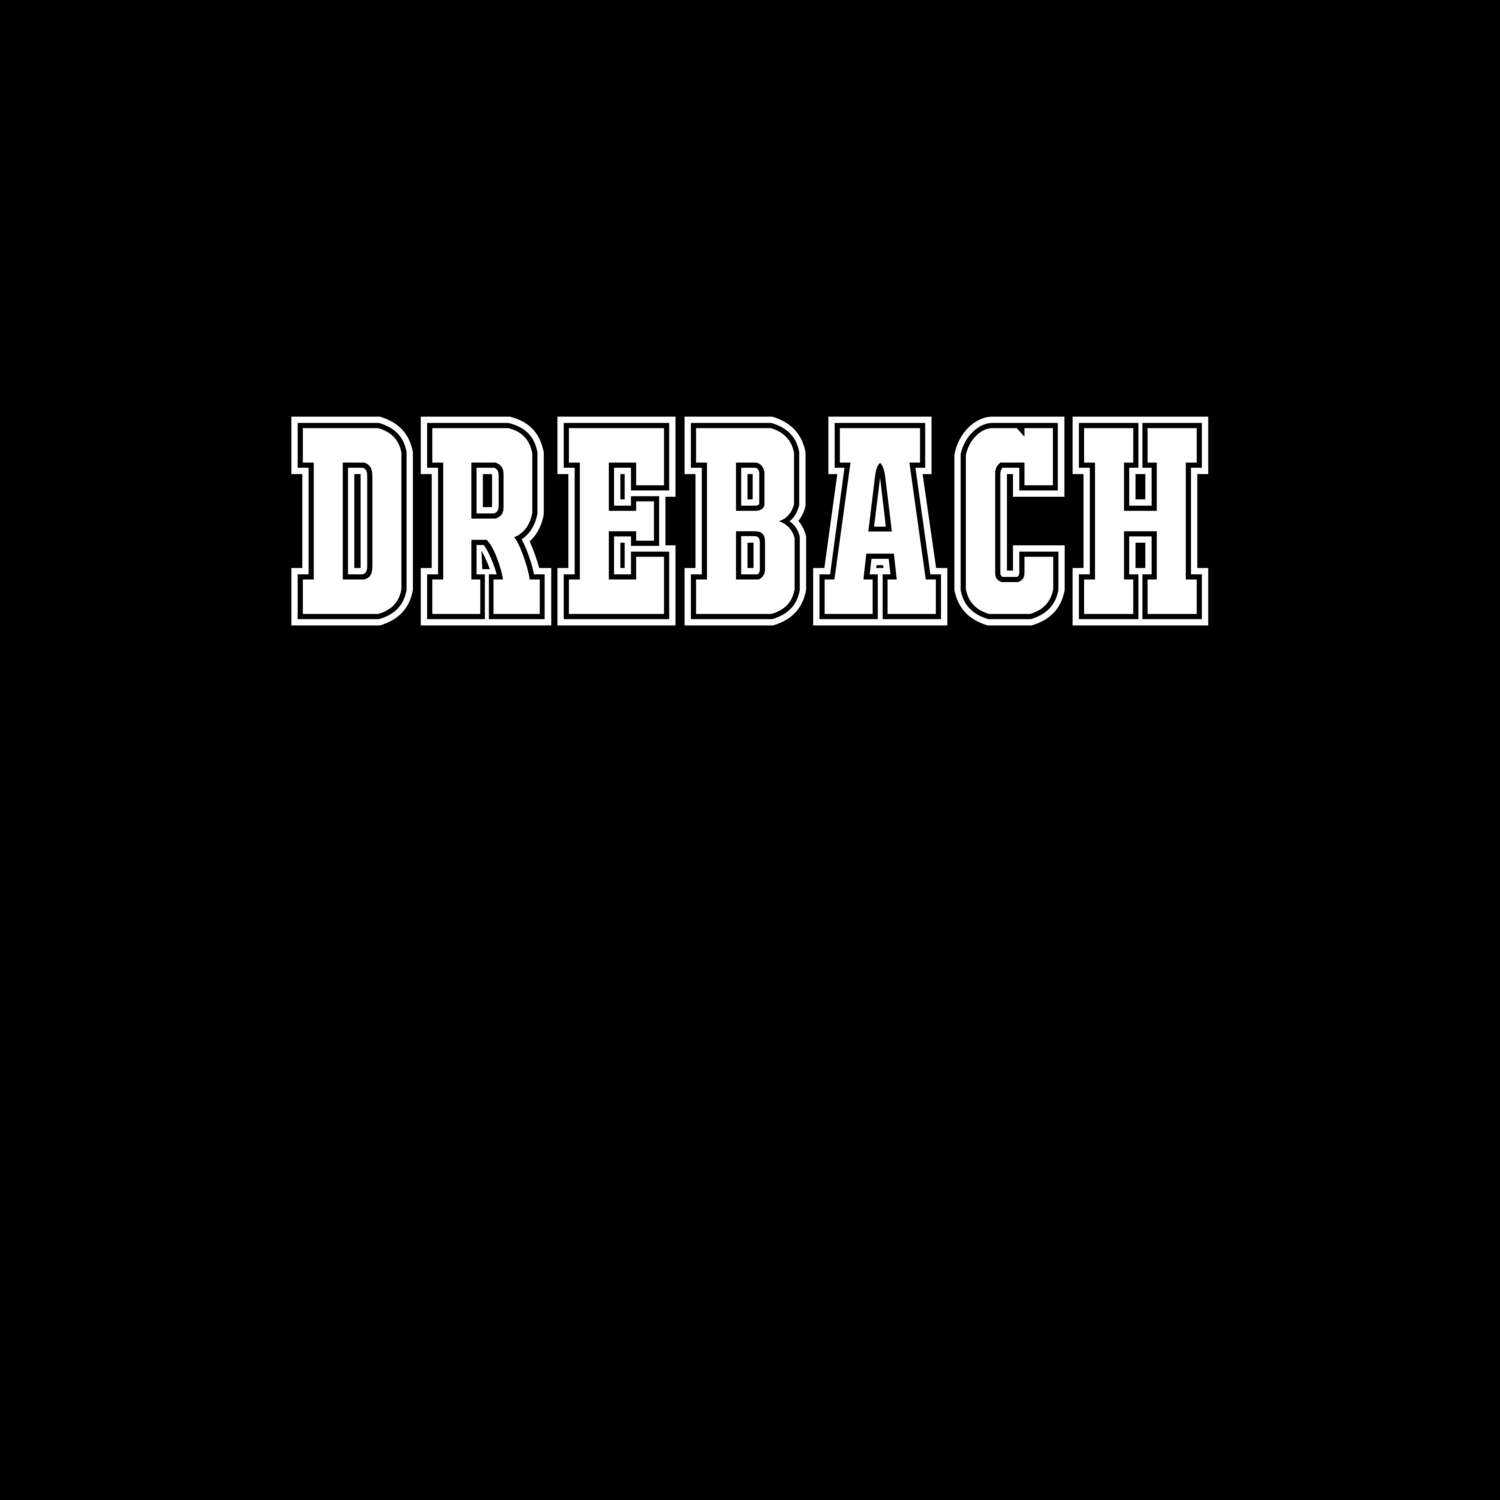 Drebach T-Shirt »Classic«